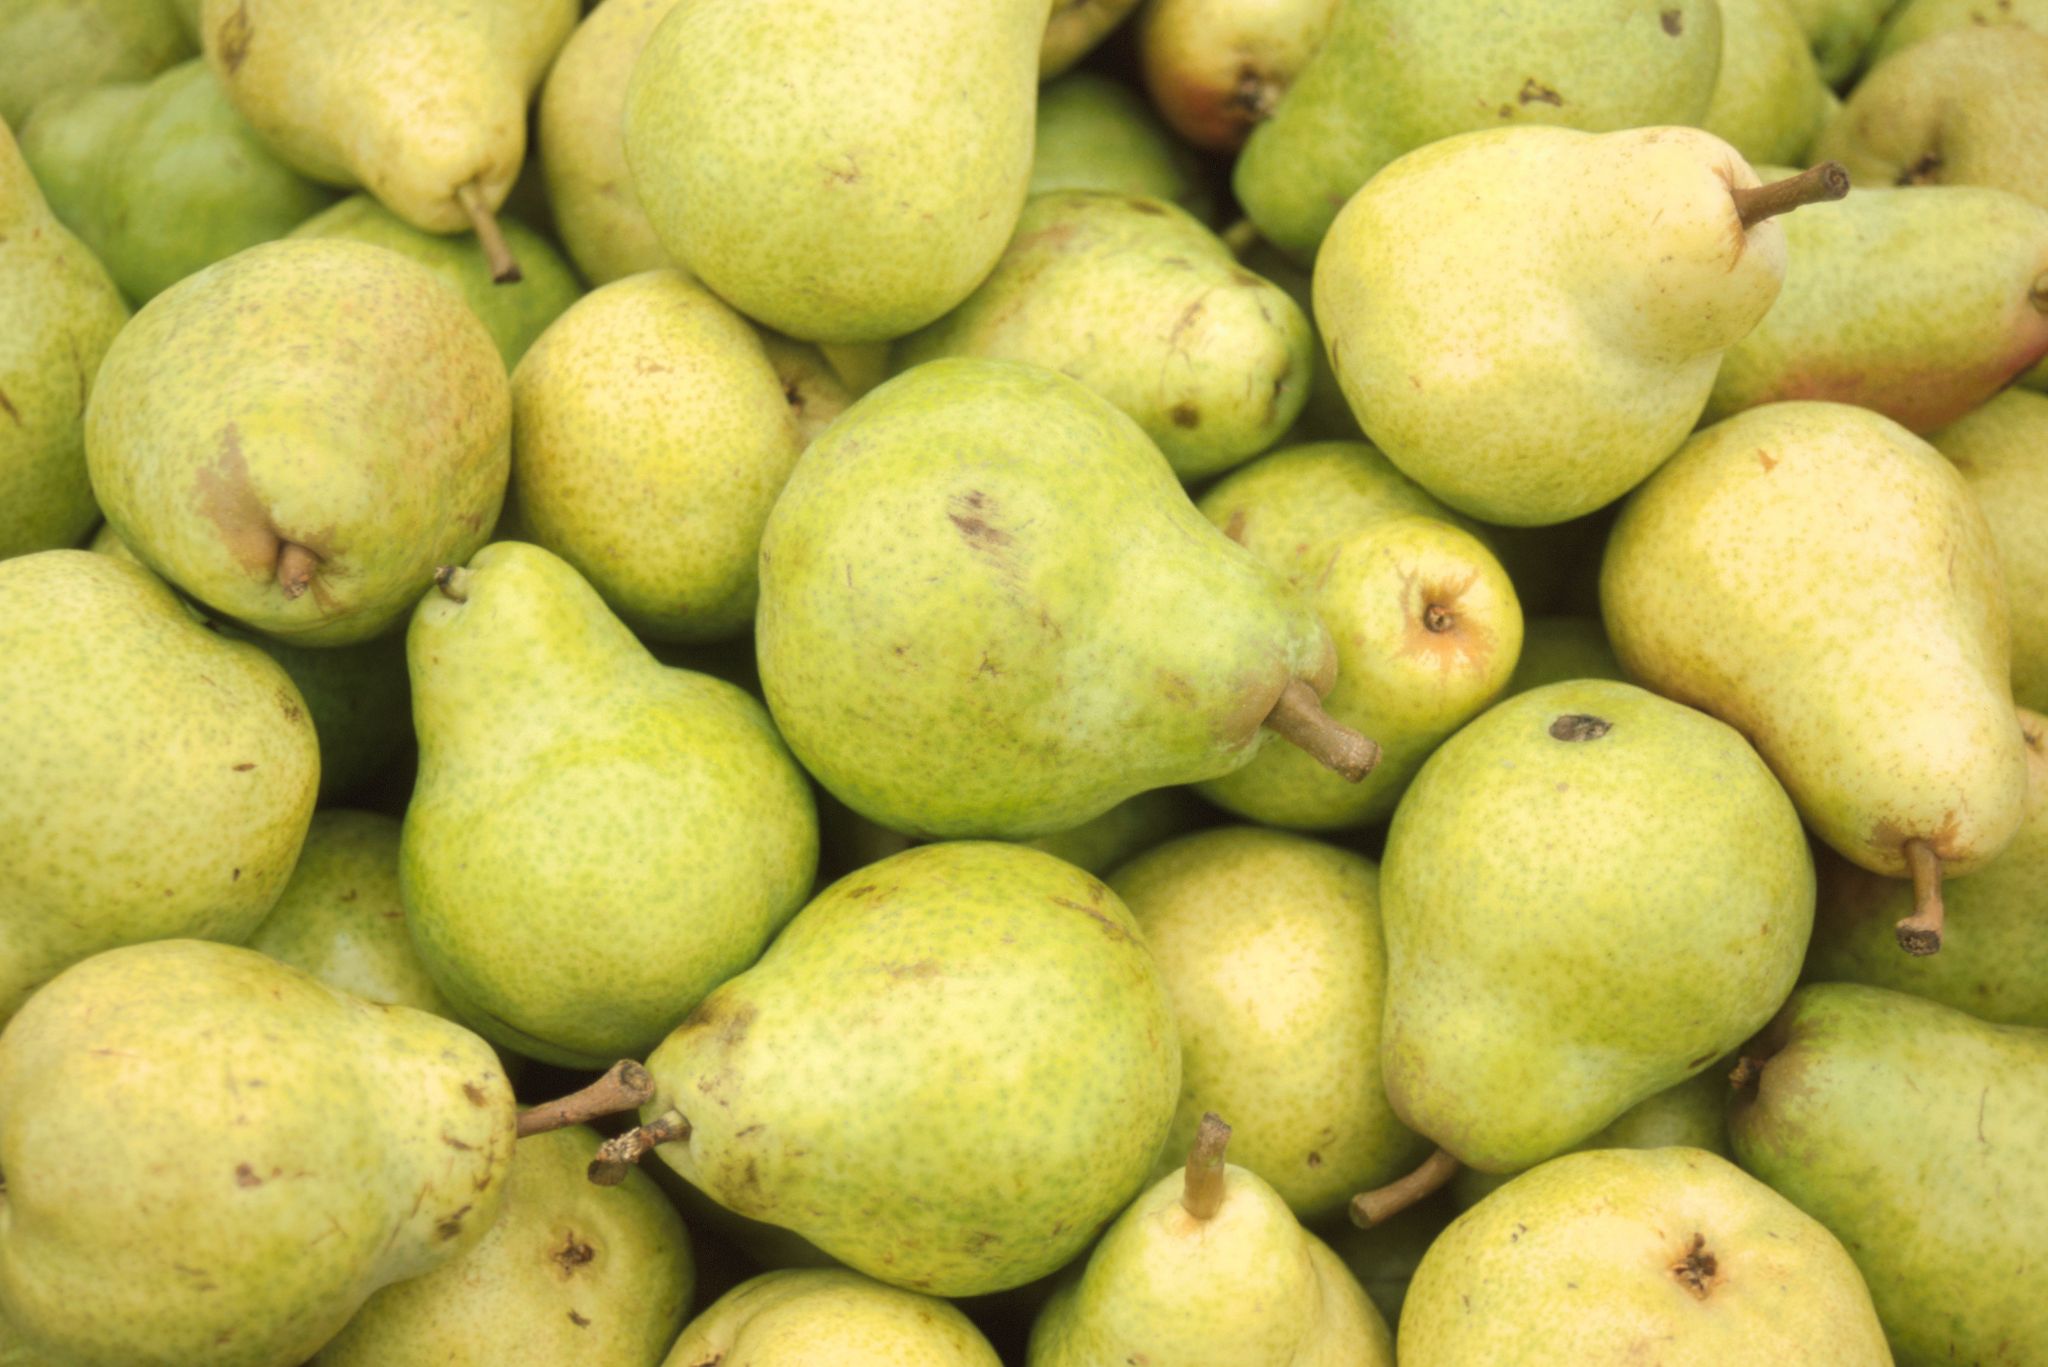 Harvested Warren pears